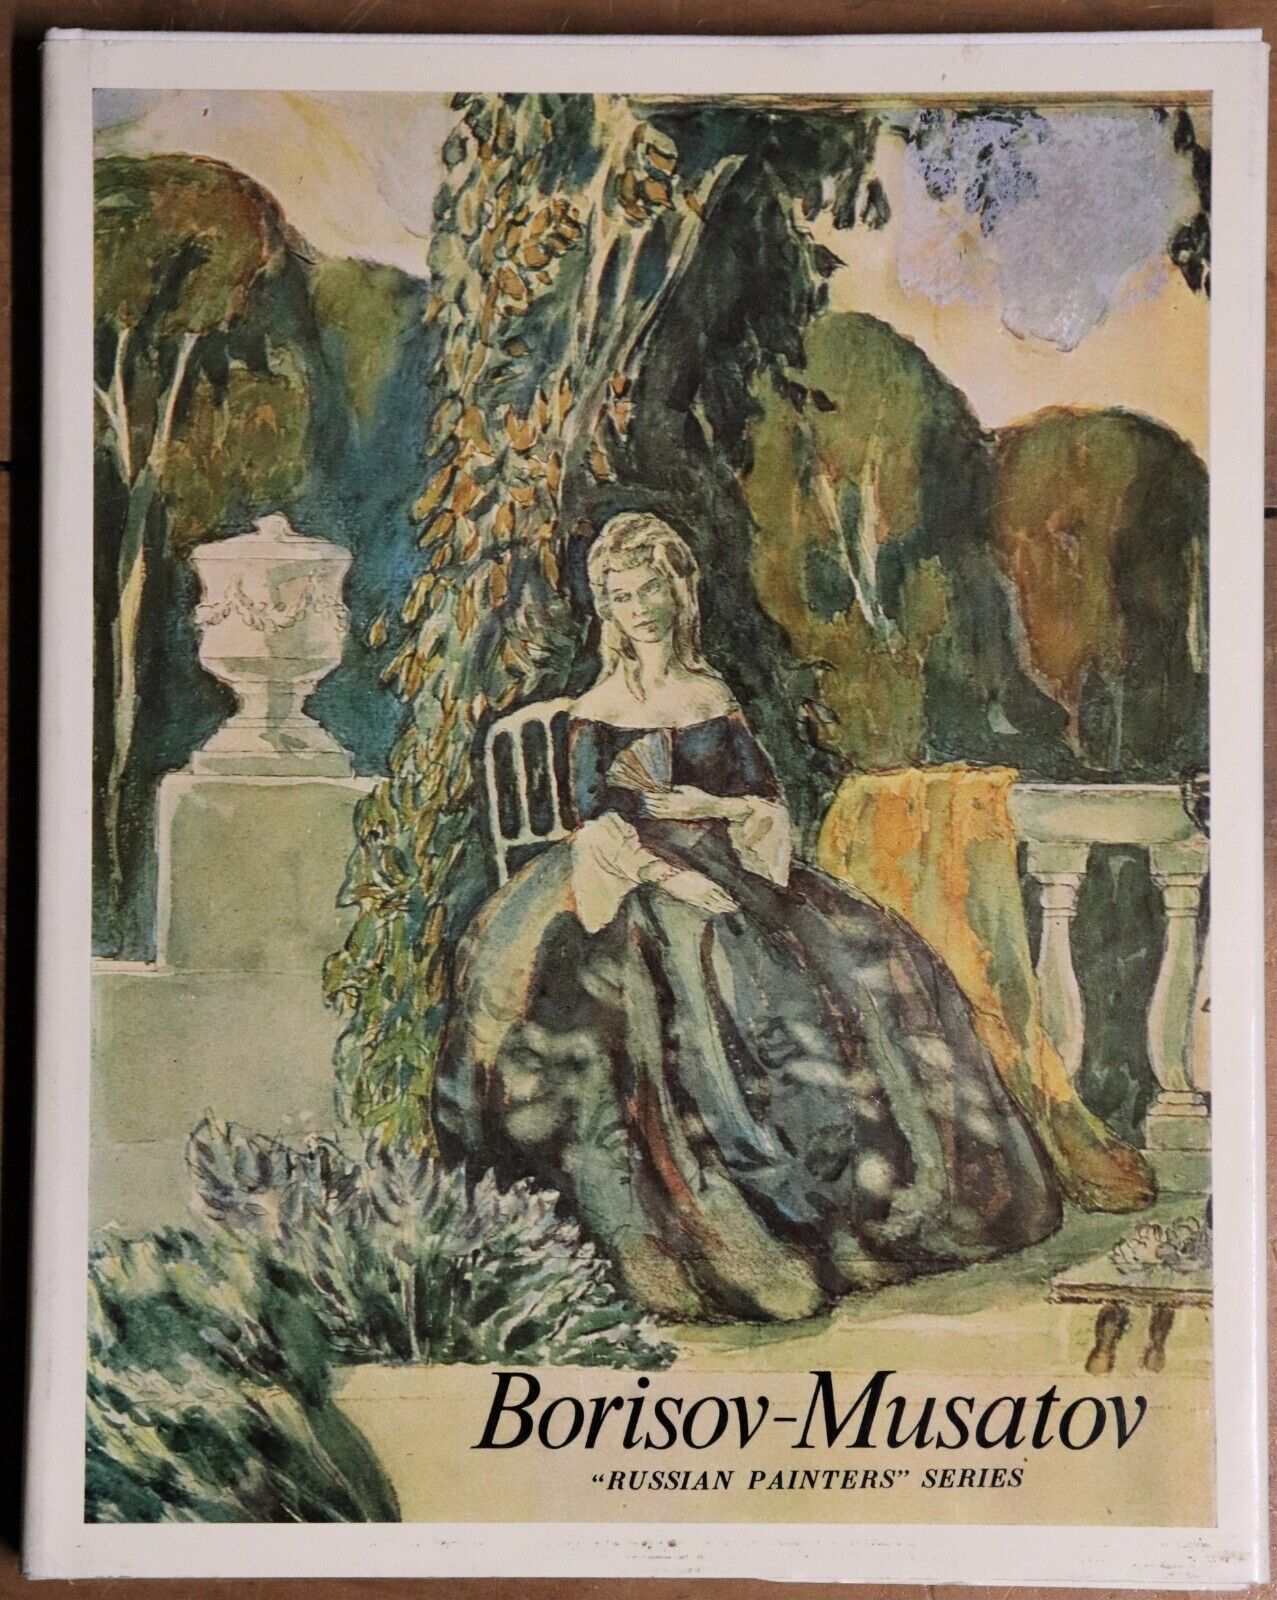 Borisov-Musatov - "Russian Painters" Series - 1975 1st Ed. Art Book